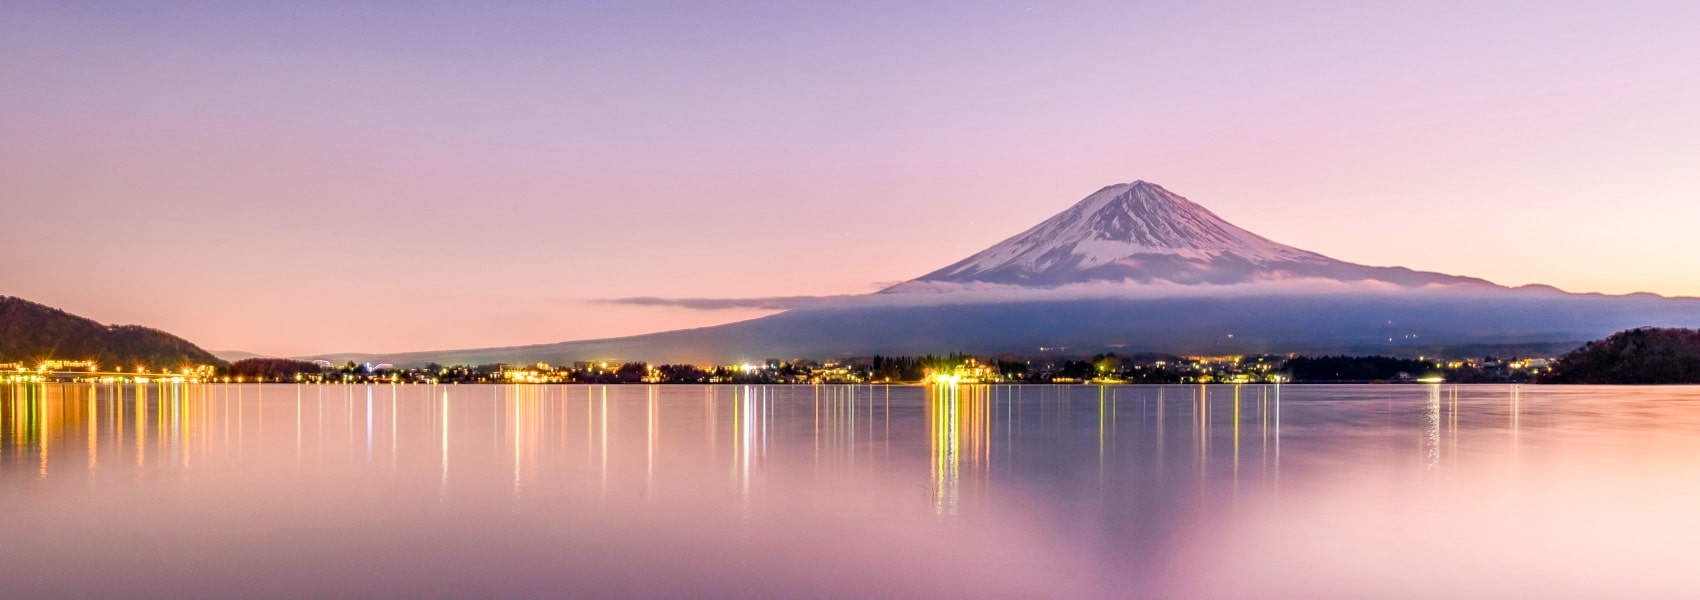 Où dormir au Mont Fuji ?